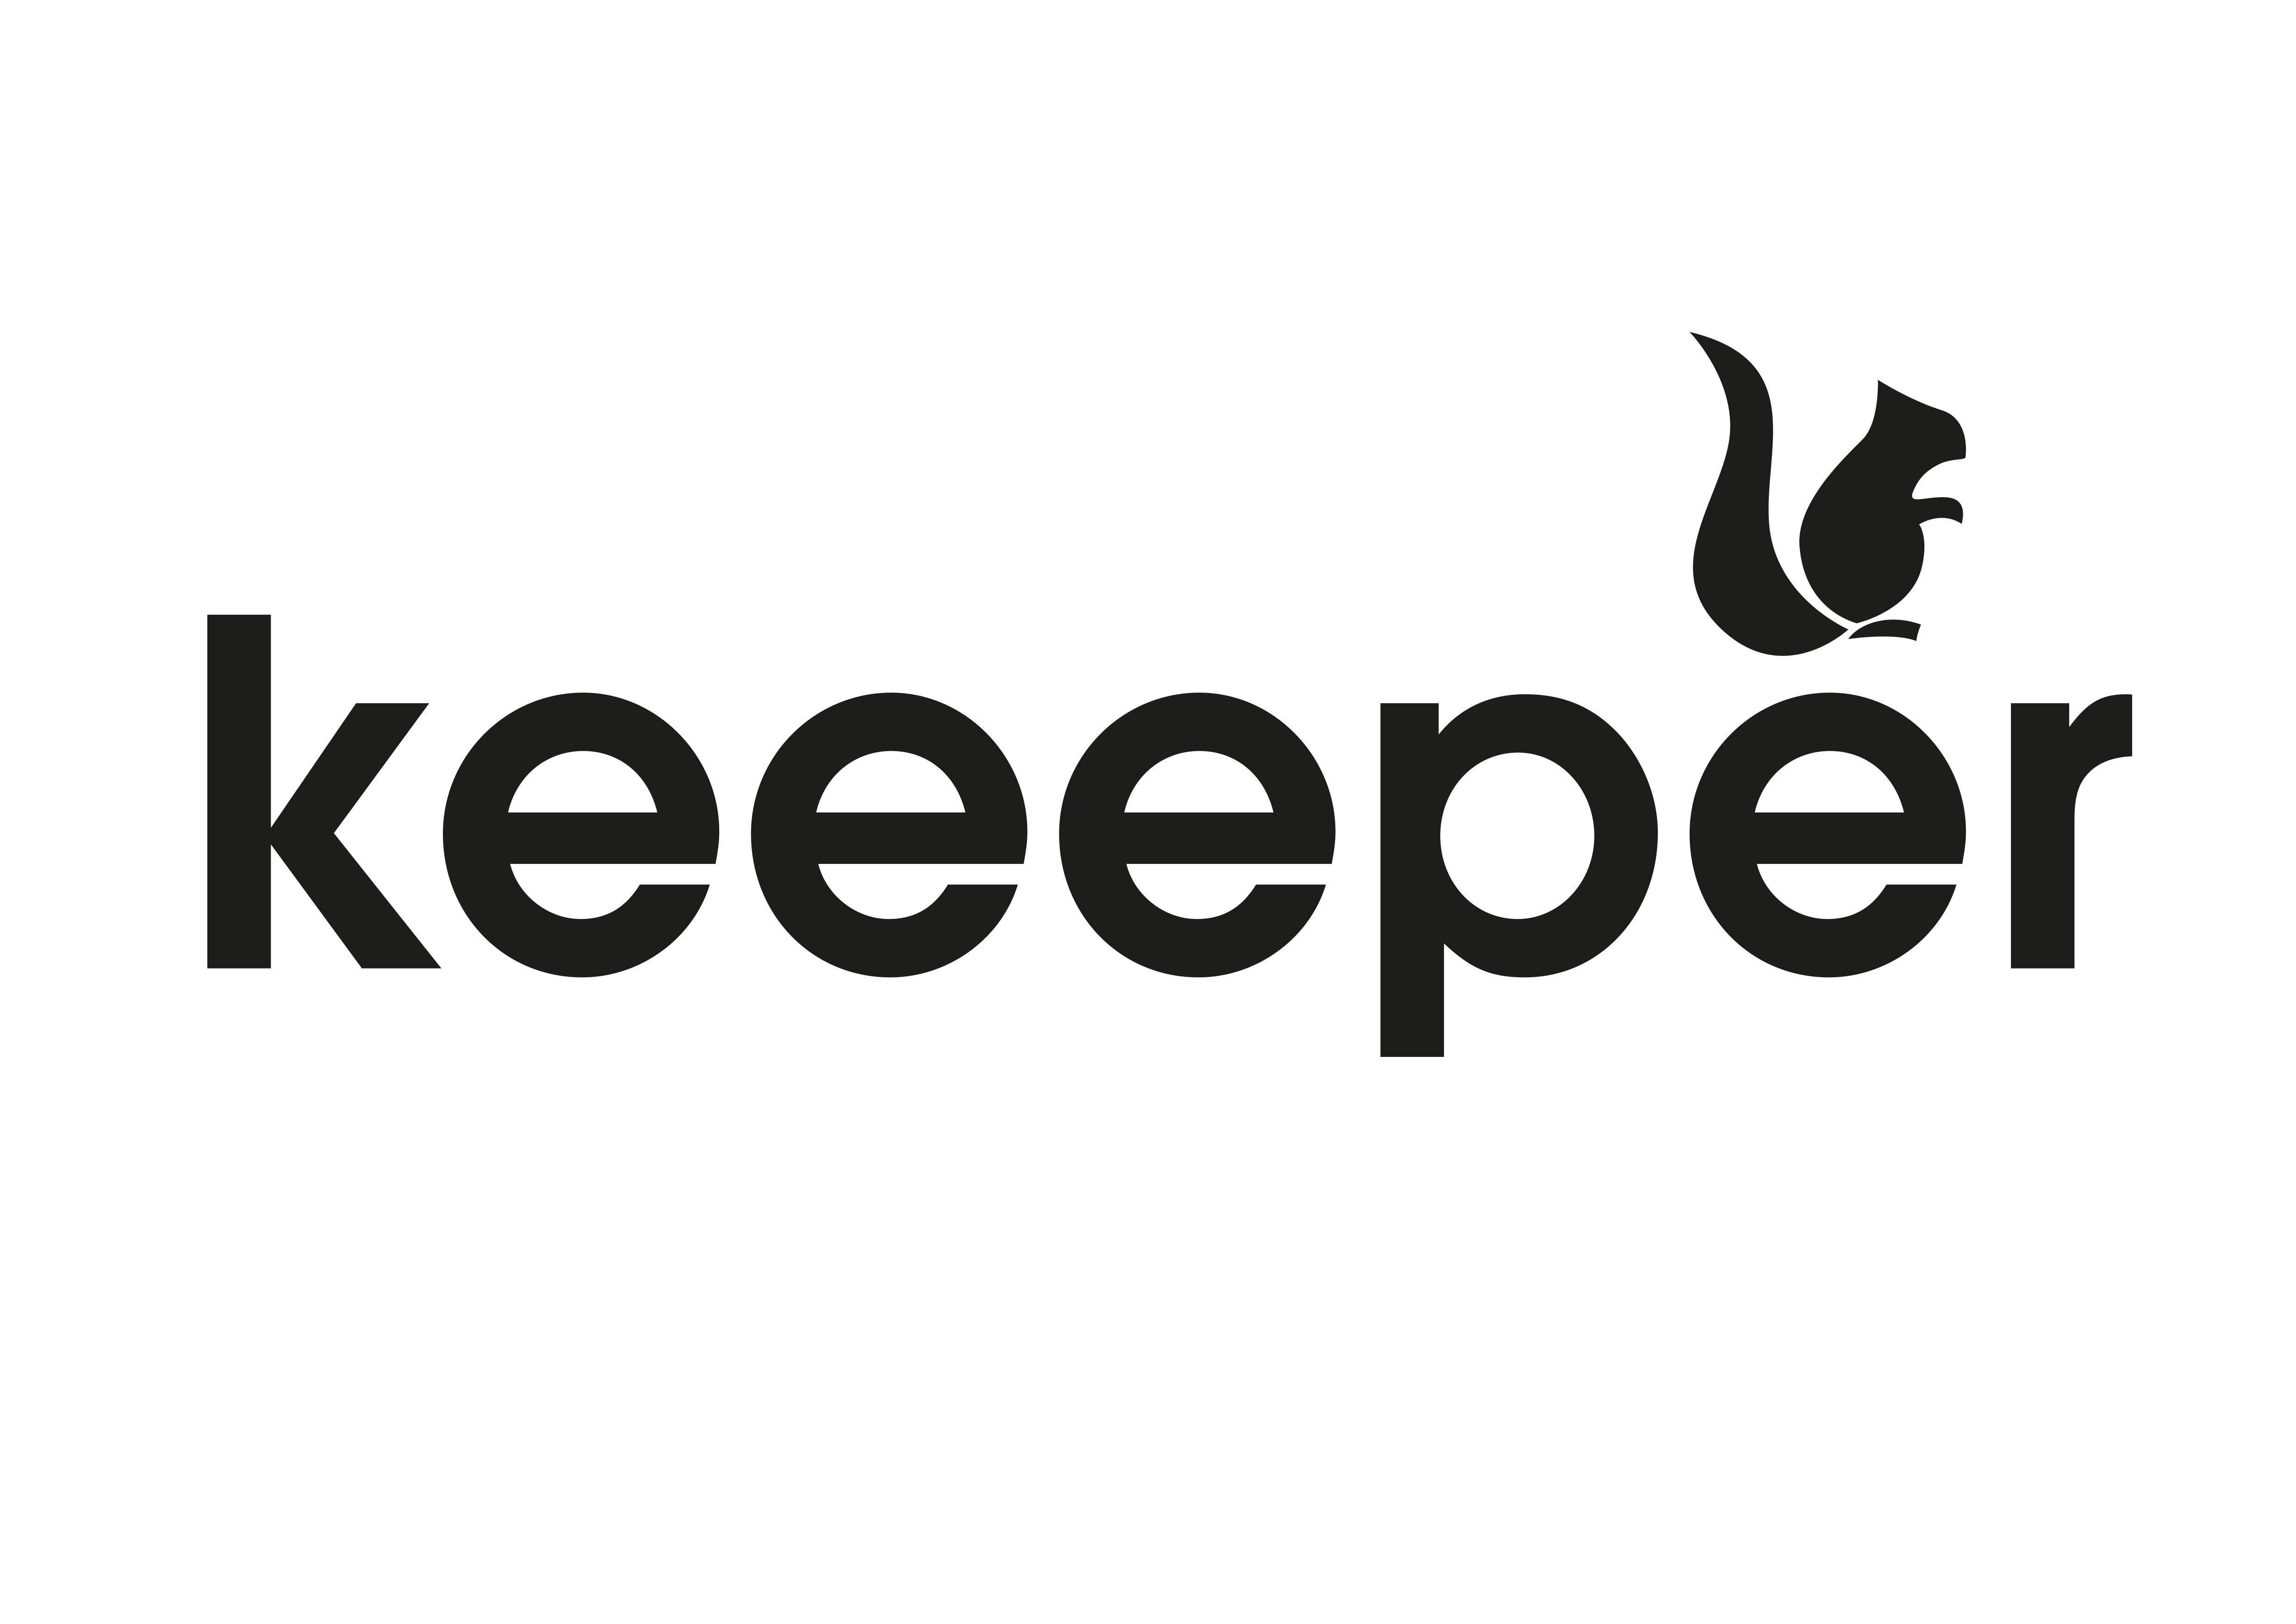 Signet Logo - File:Keeeper-logo-signet.jpg - Wikimedia Commons